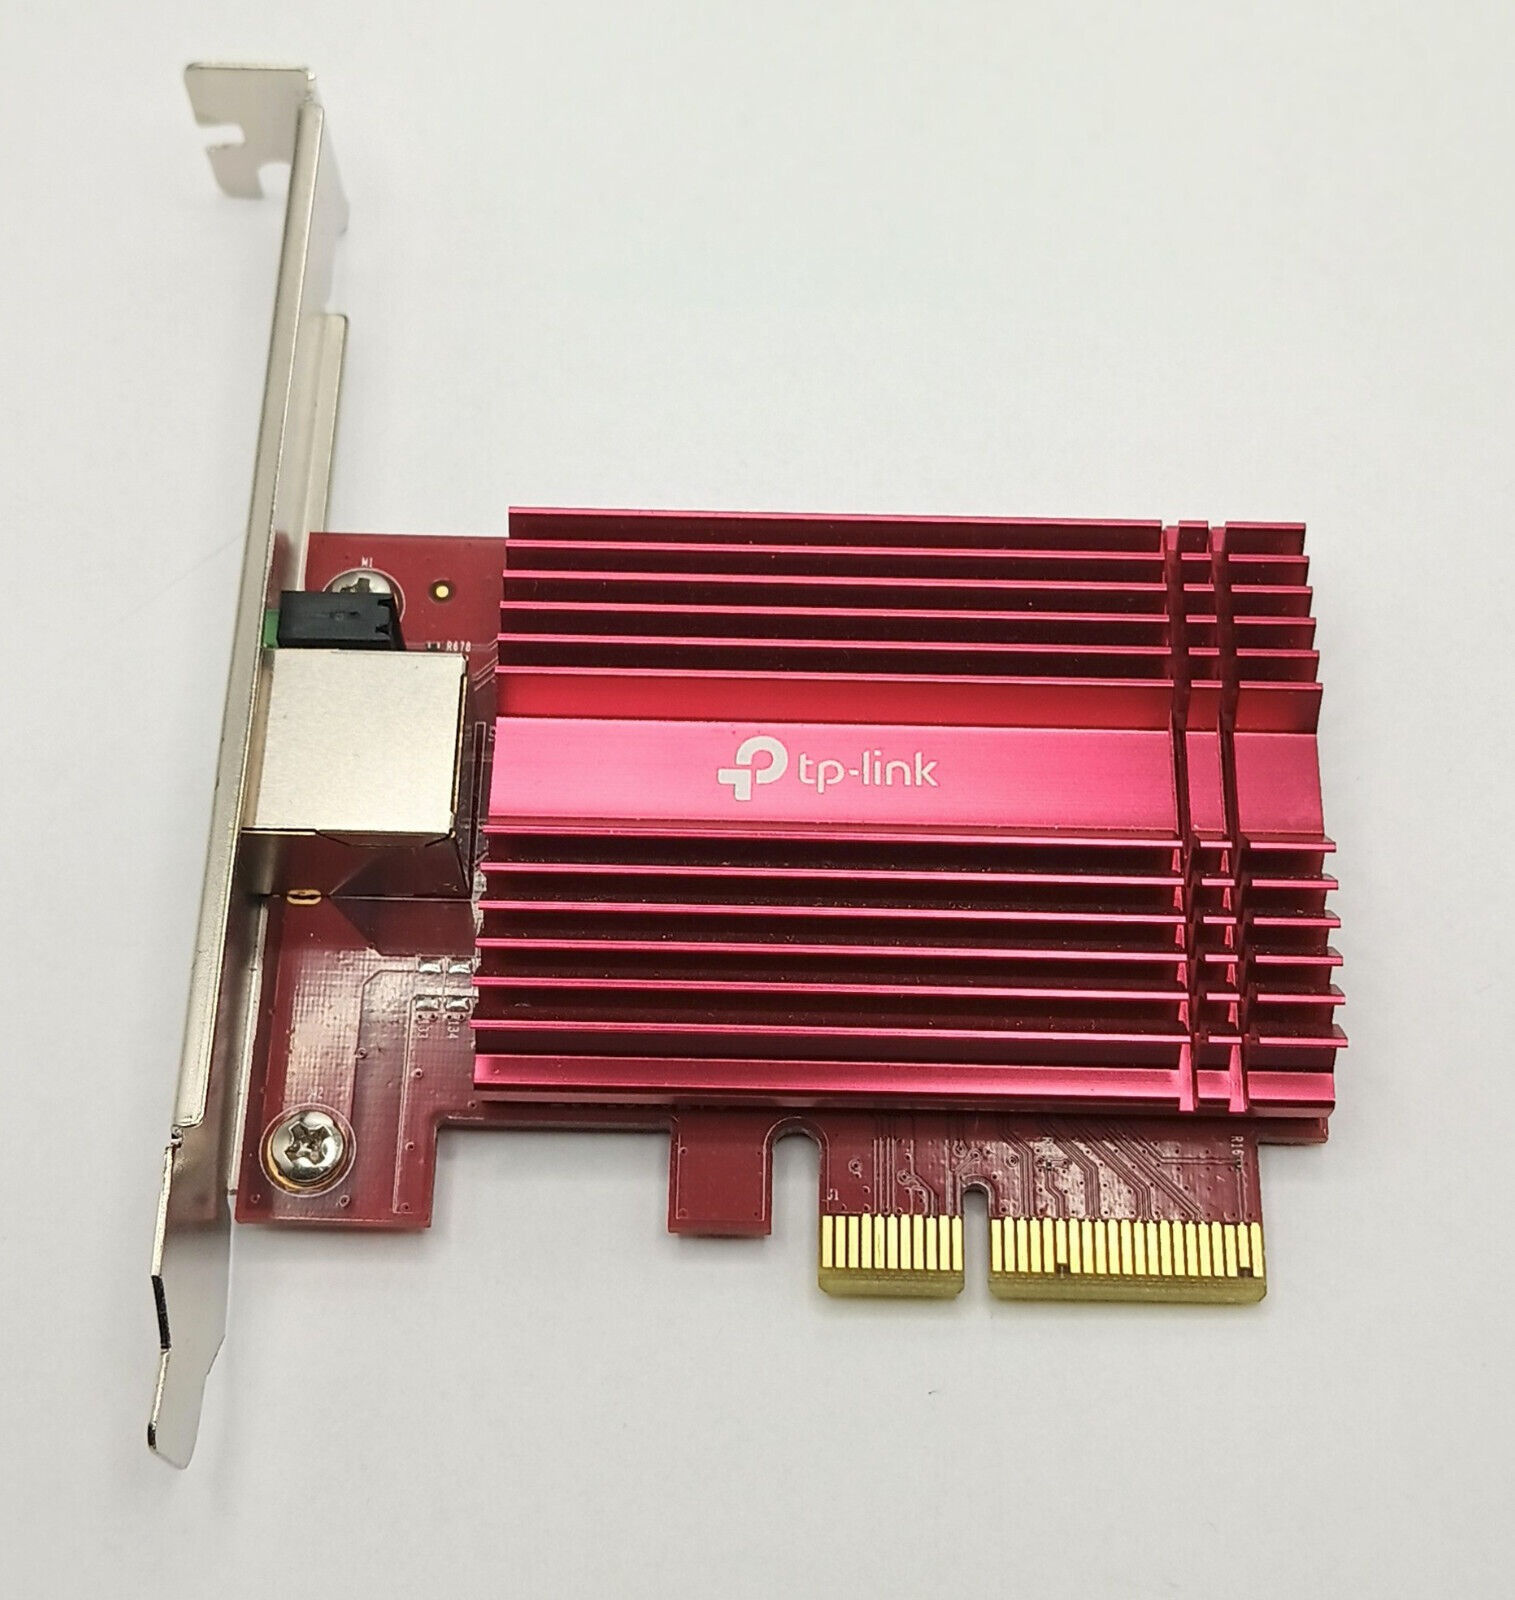 TP-Link TX401 - 10GB 10 Gigabit PCI Express PCI-E Network Adapter Card PC